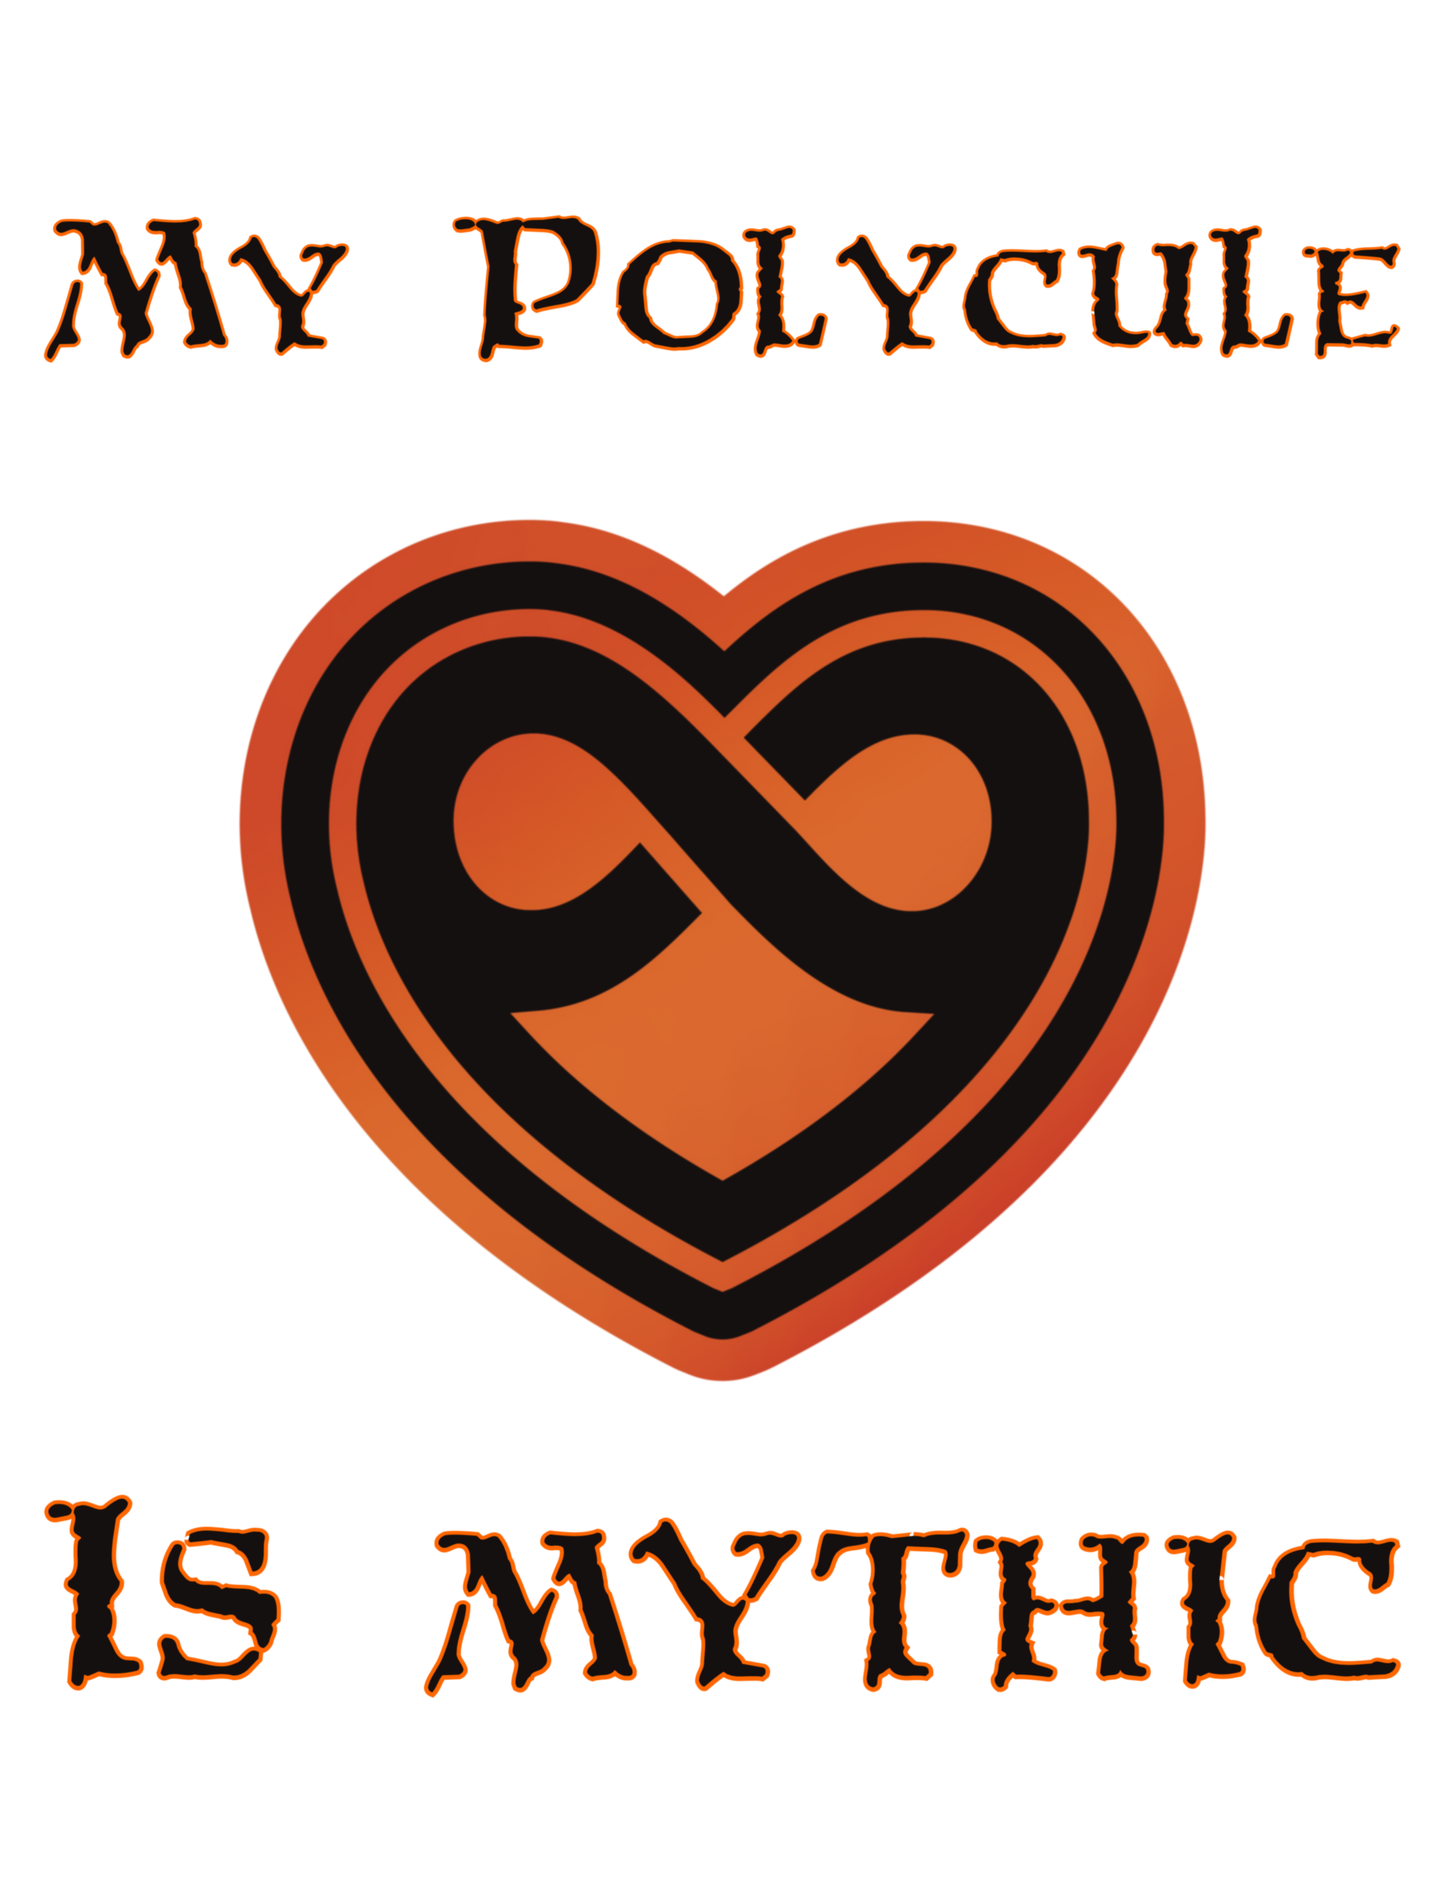 My Polycule is Mythic